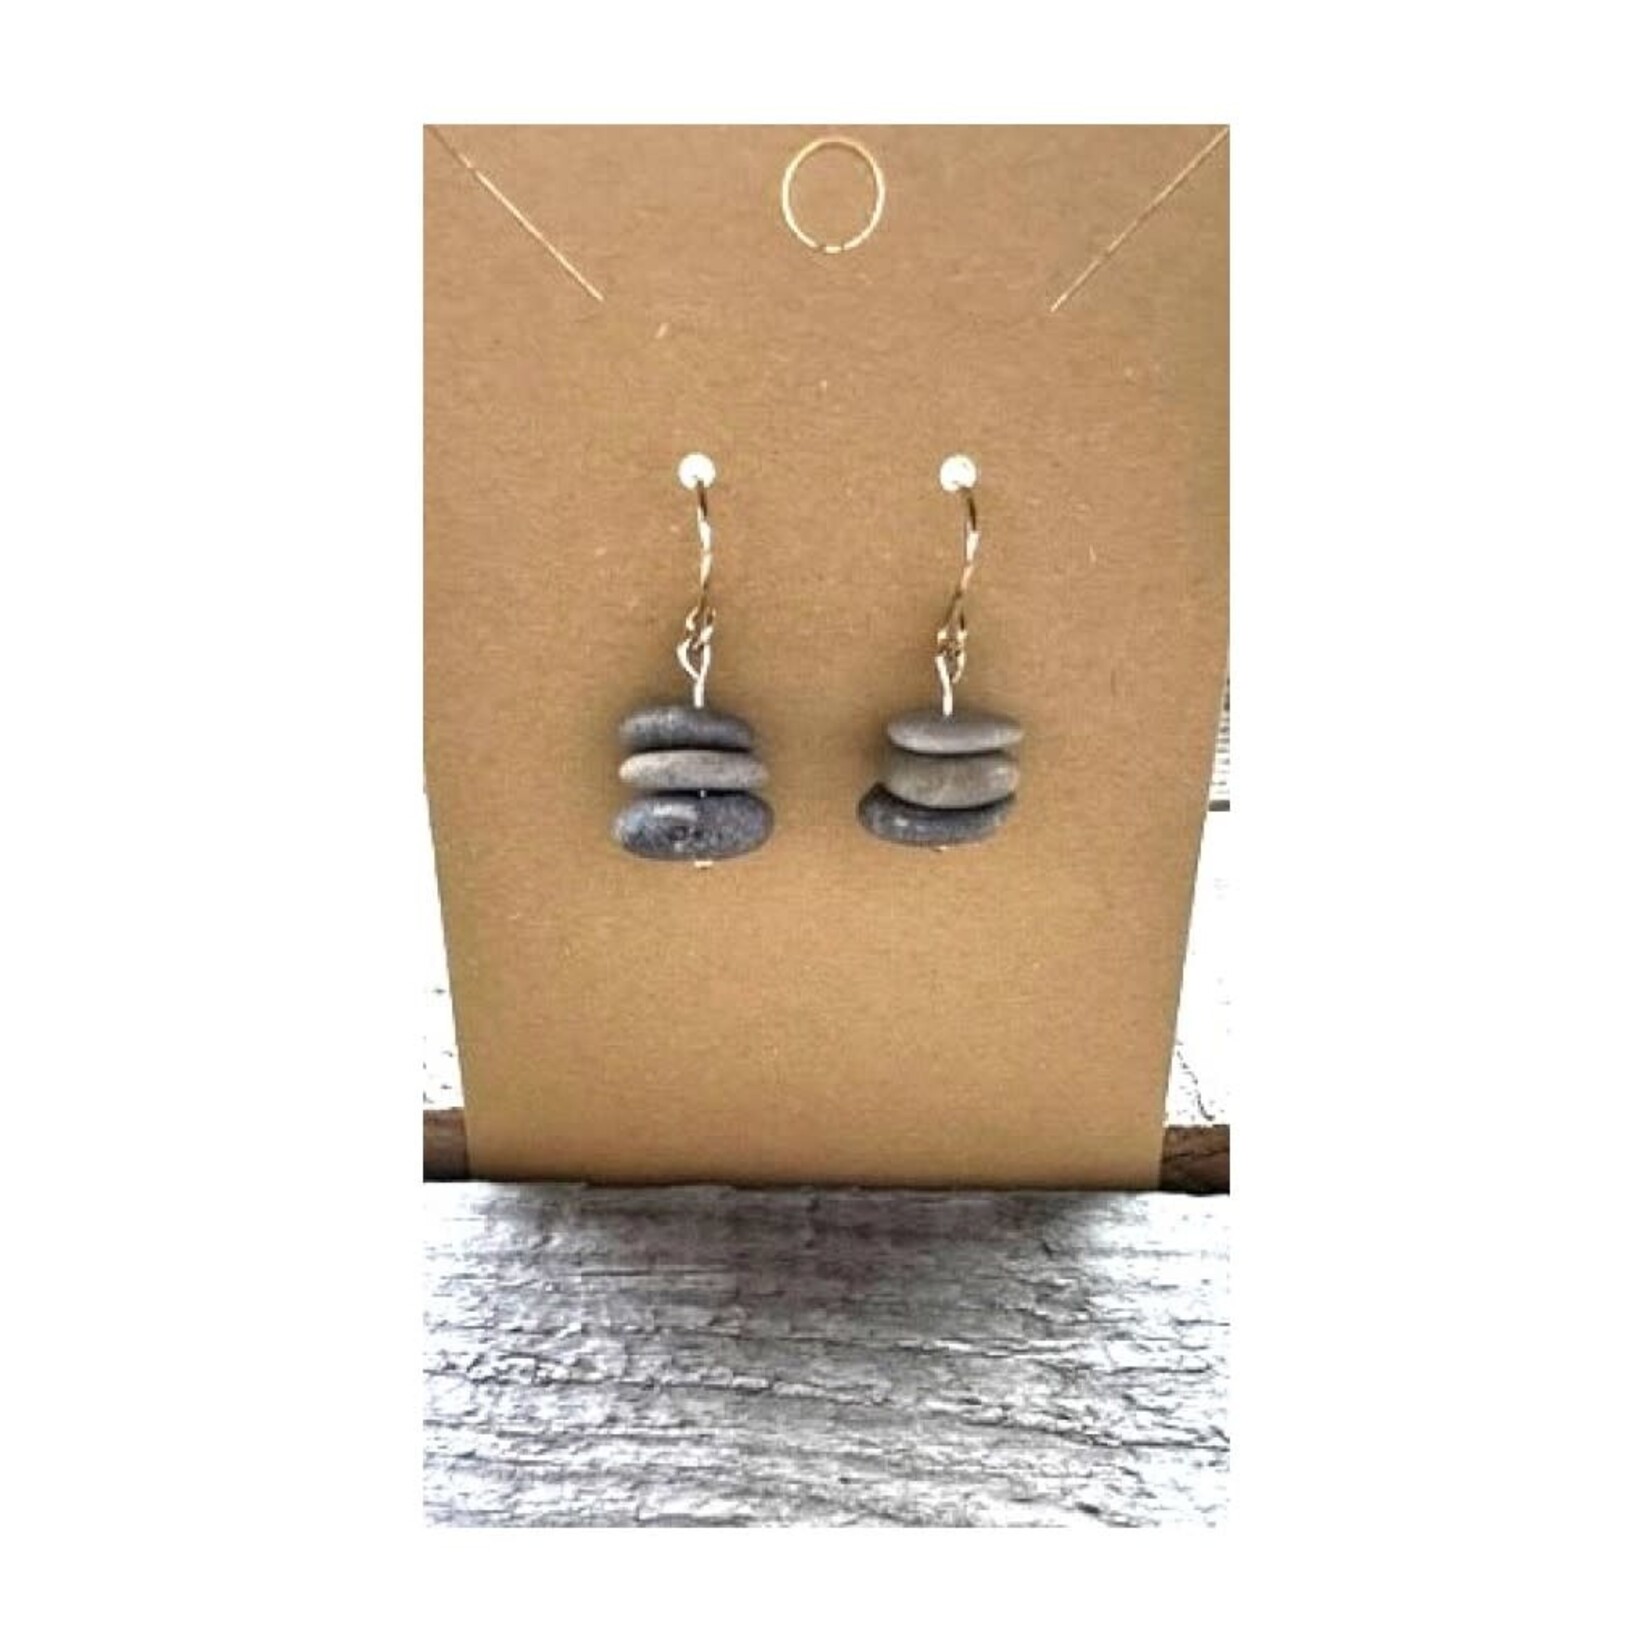 French Hook Earrings - Stone Cairn 13